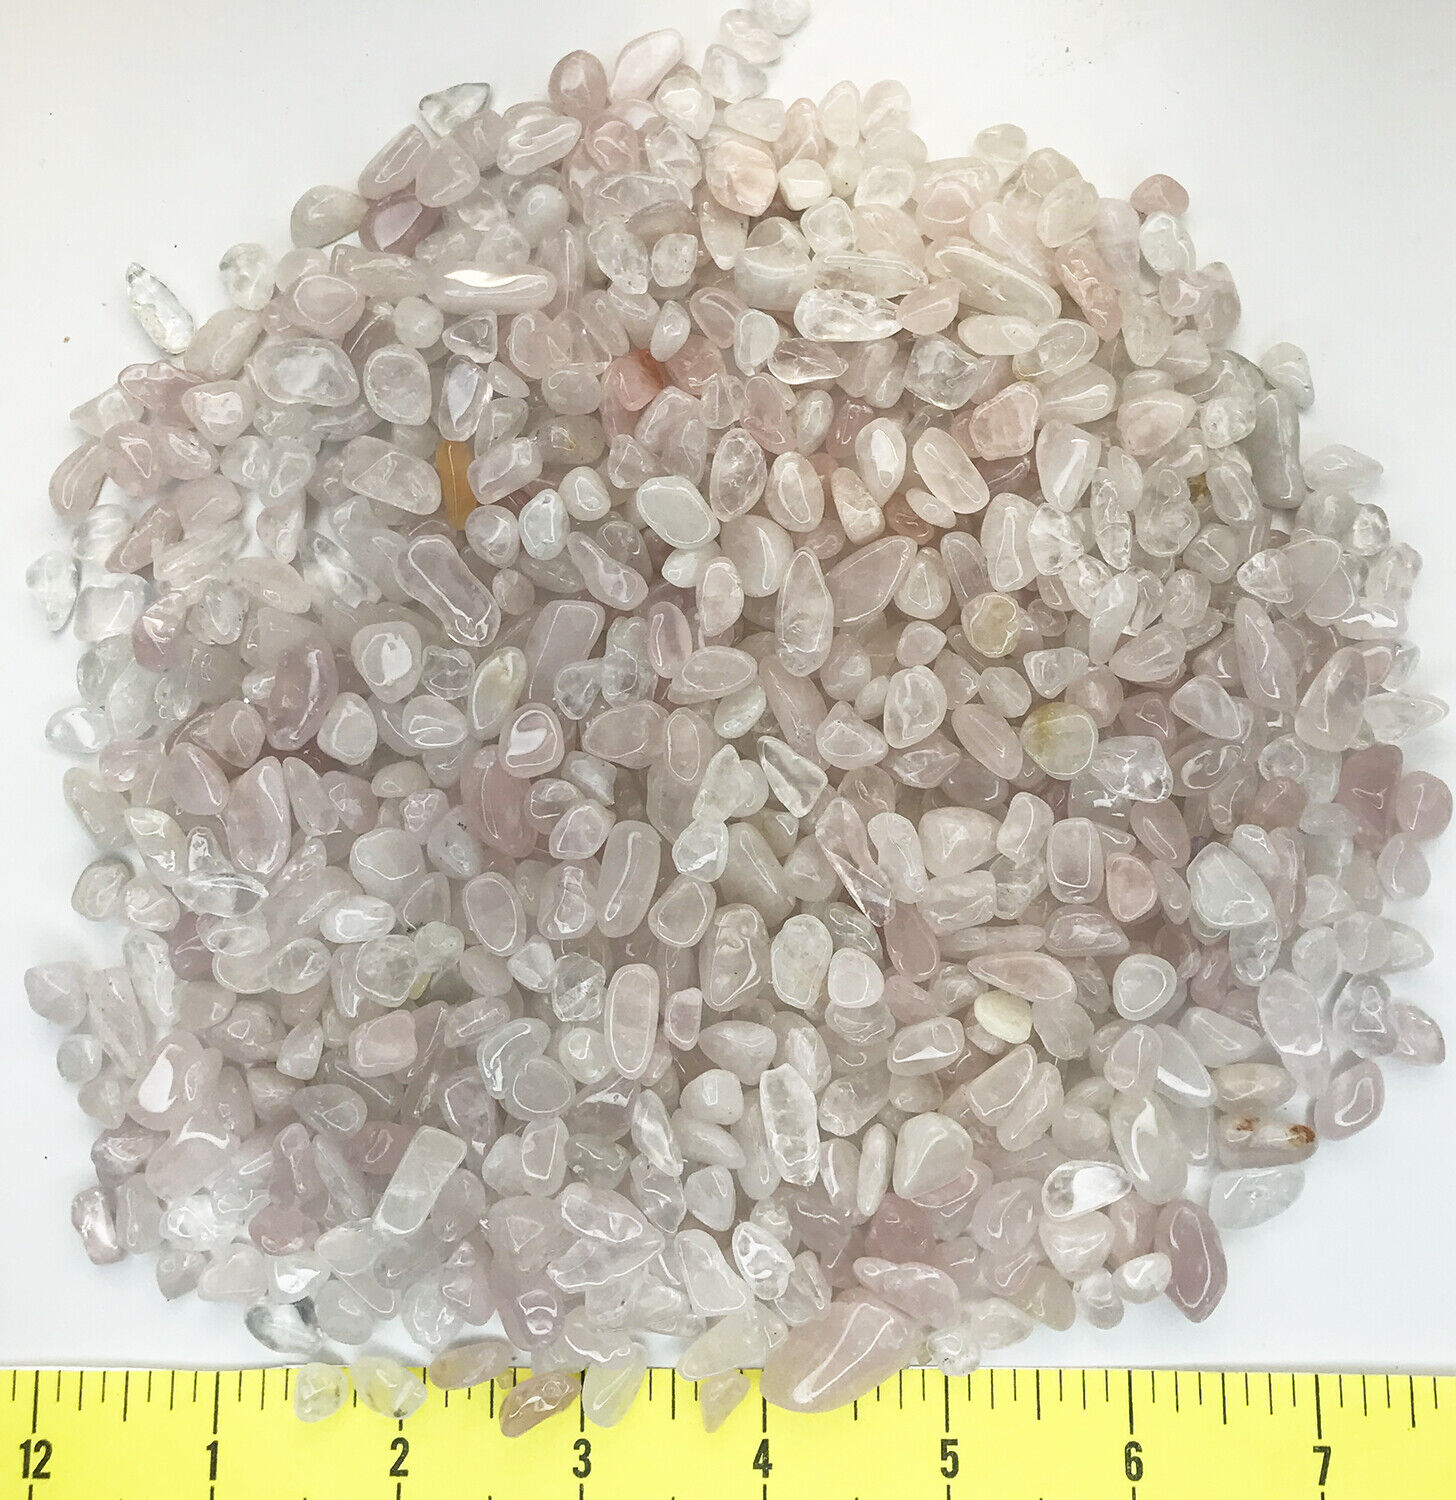 QUARTZ ROSE X-Small to Small (8-20mm) polished pink crystal quartz    1 lb.